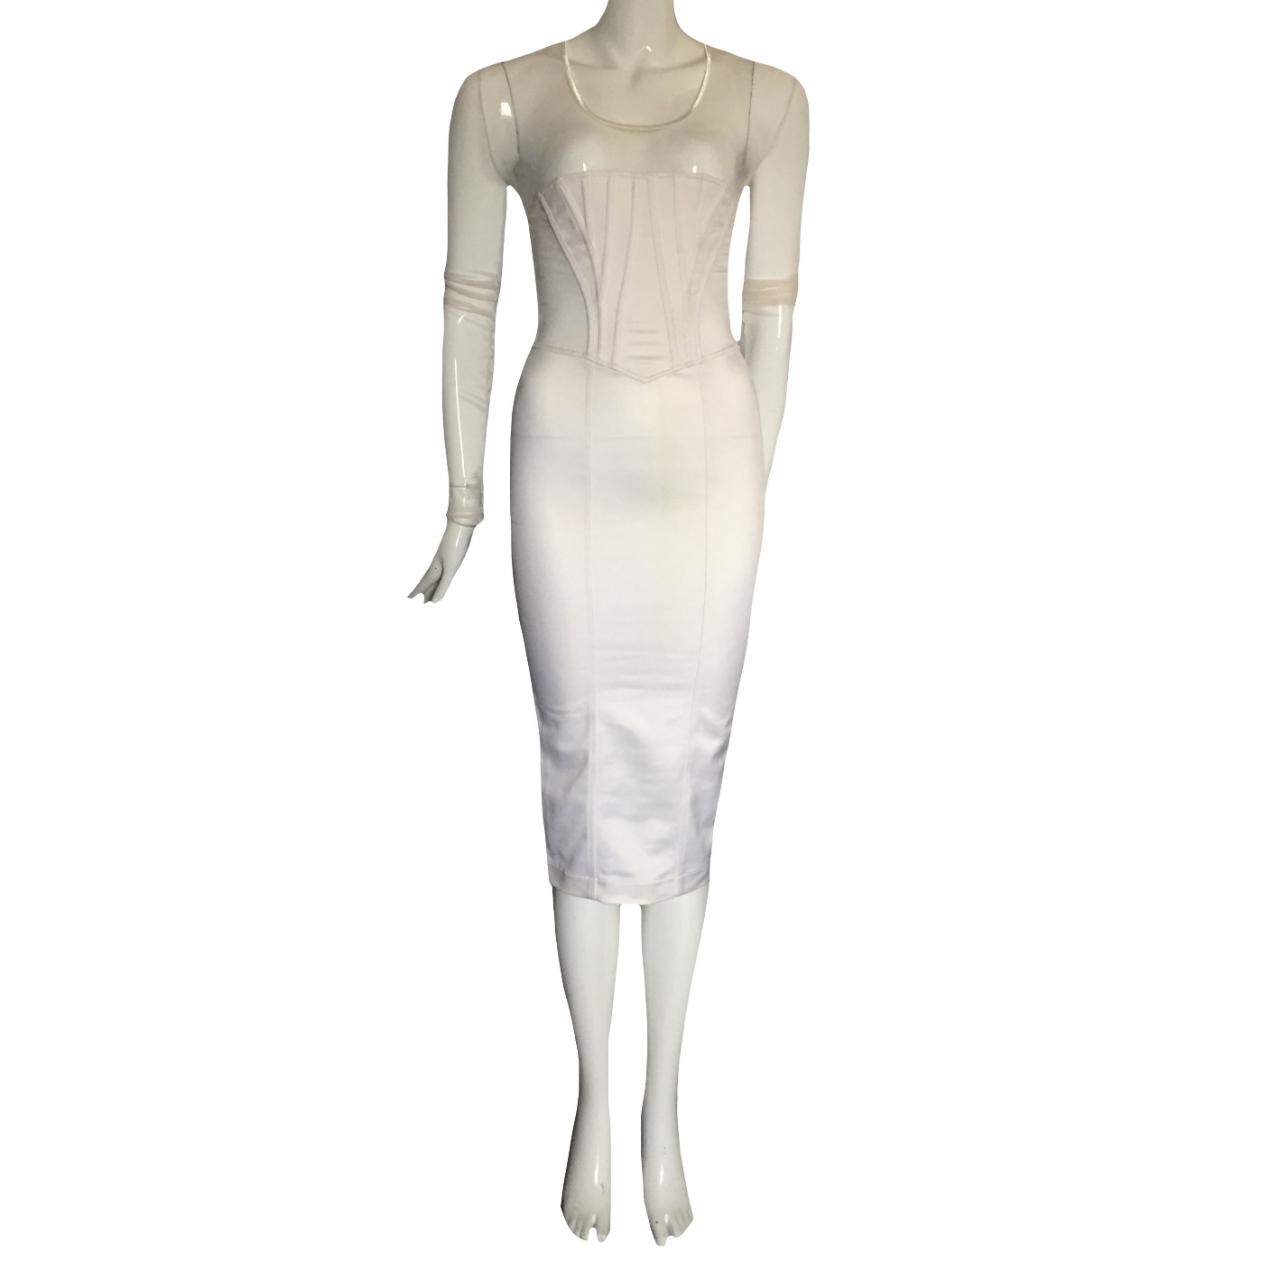 CHANTAL THOMASS SS1996 White dress with fishnet... - Depop